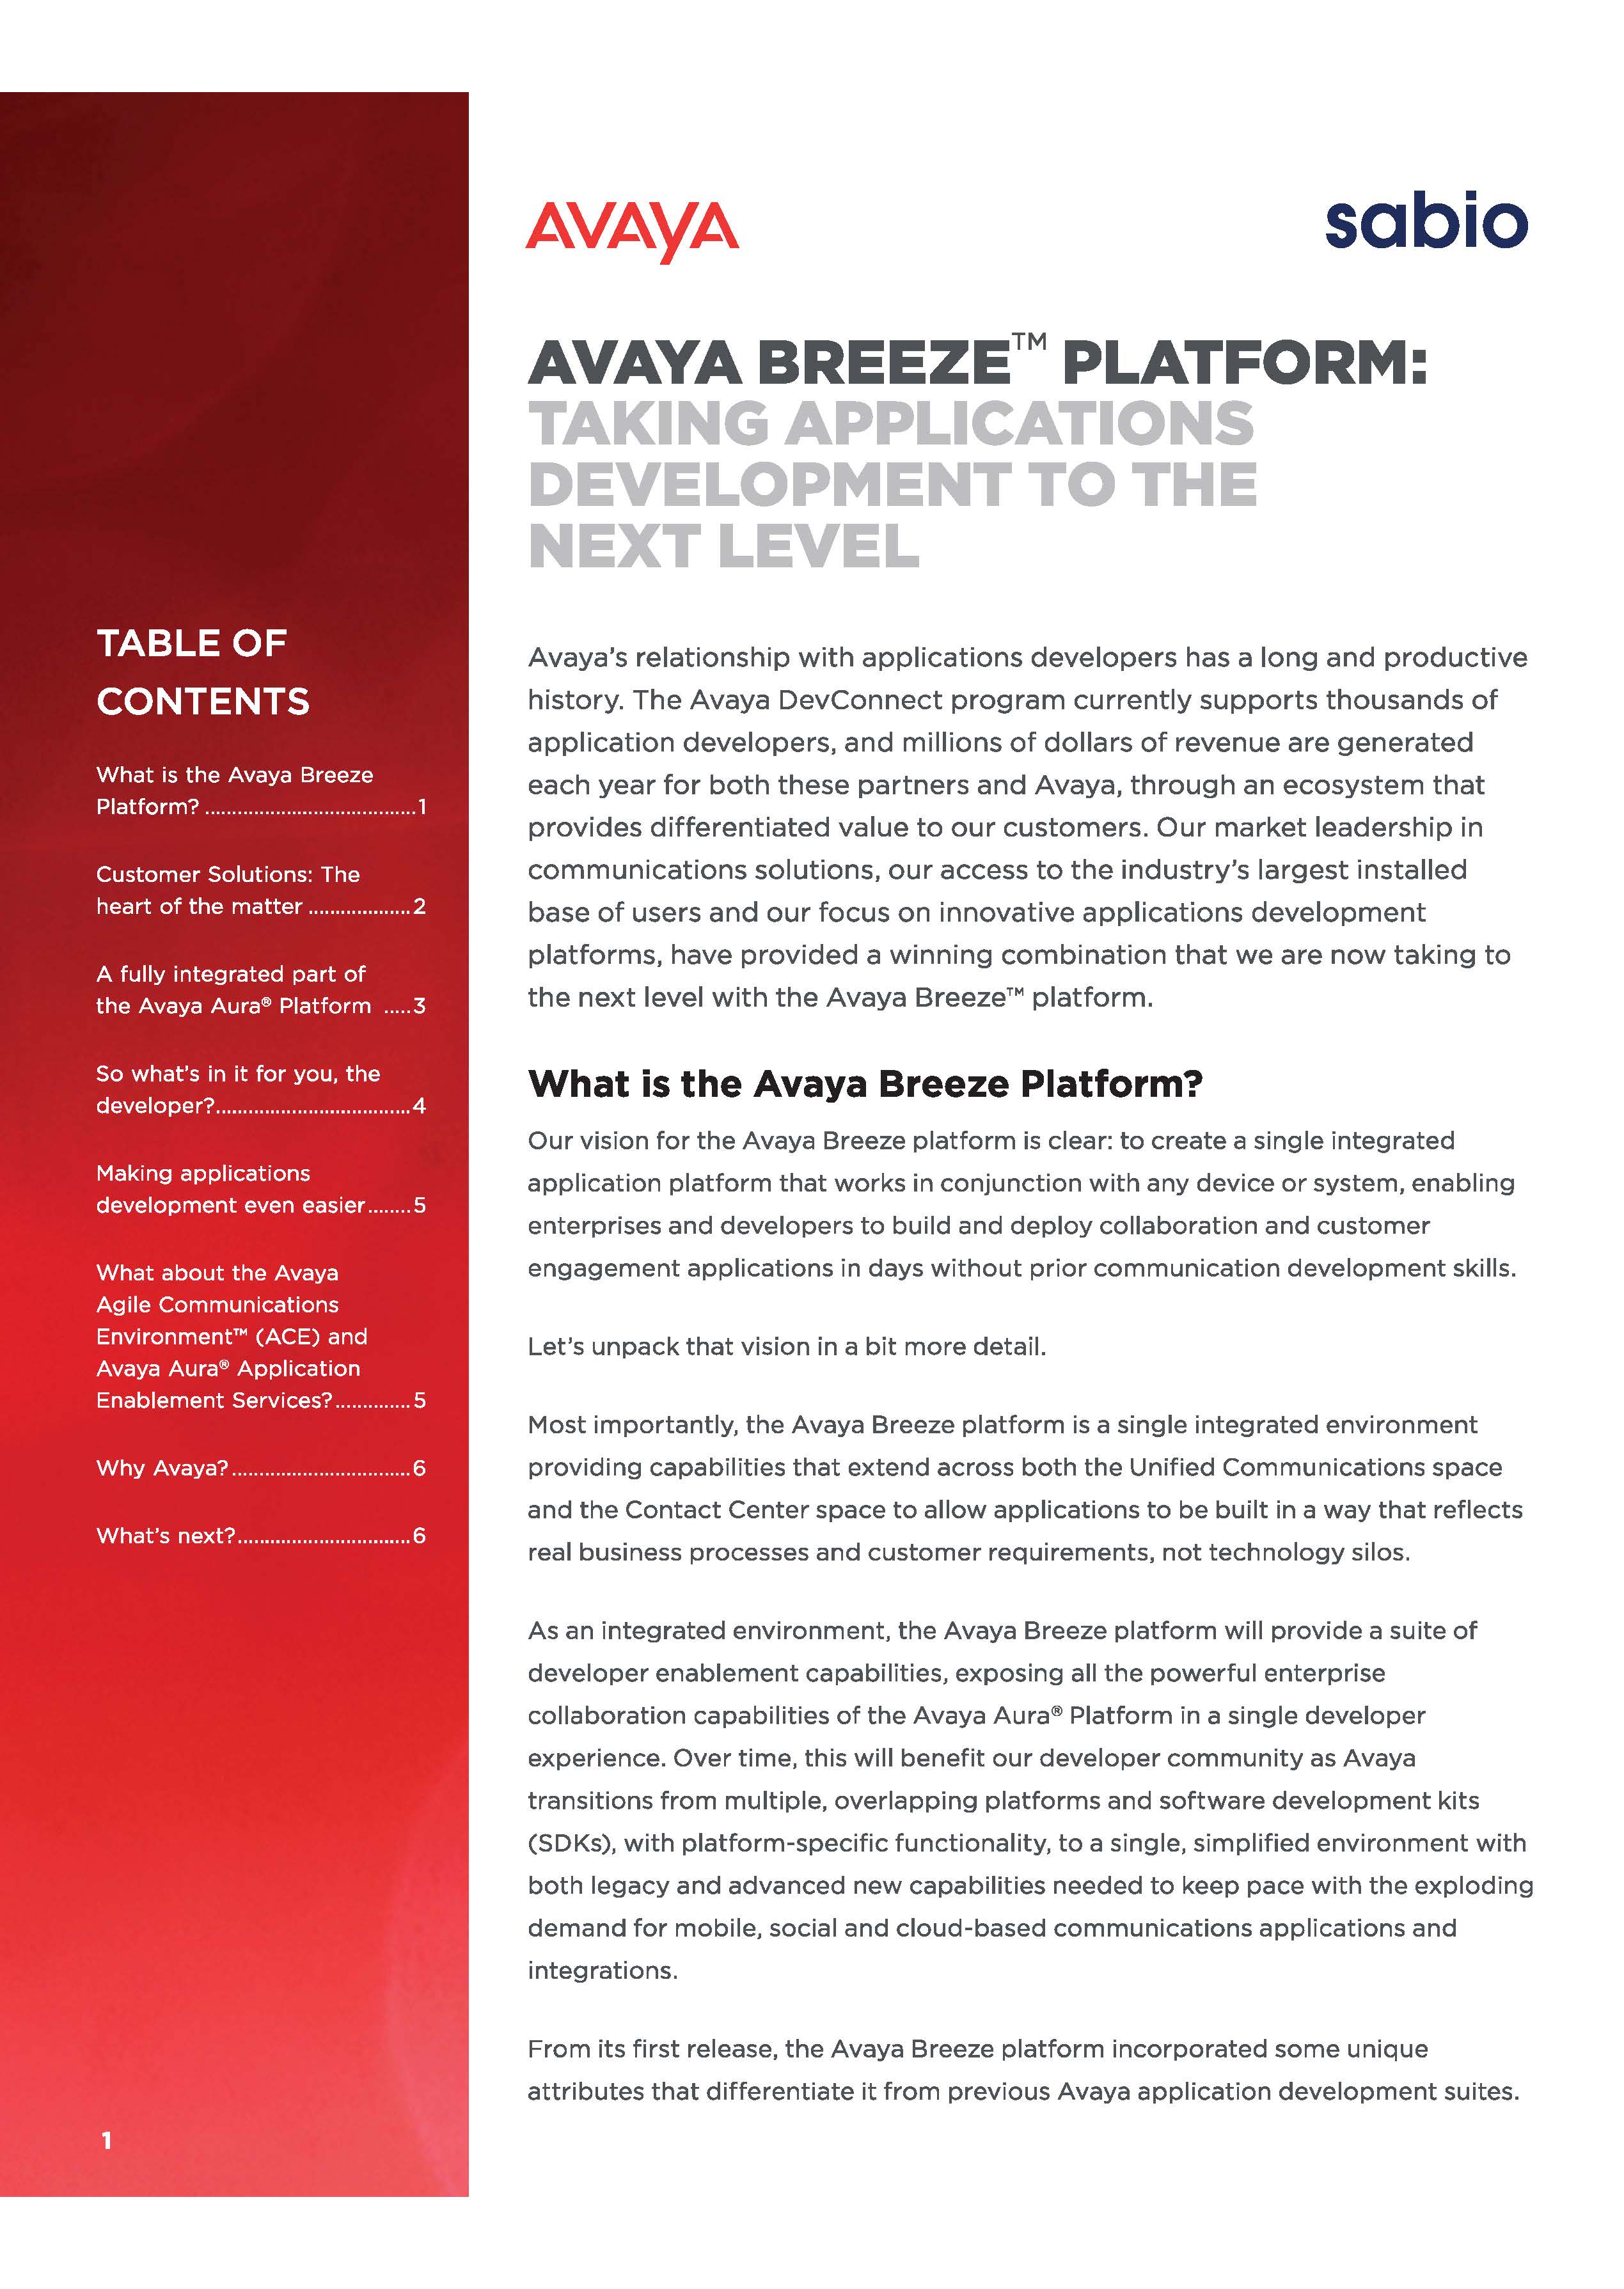 Avaya Breeze™ Platform: Taking Applications Development to the Next Level